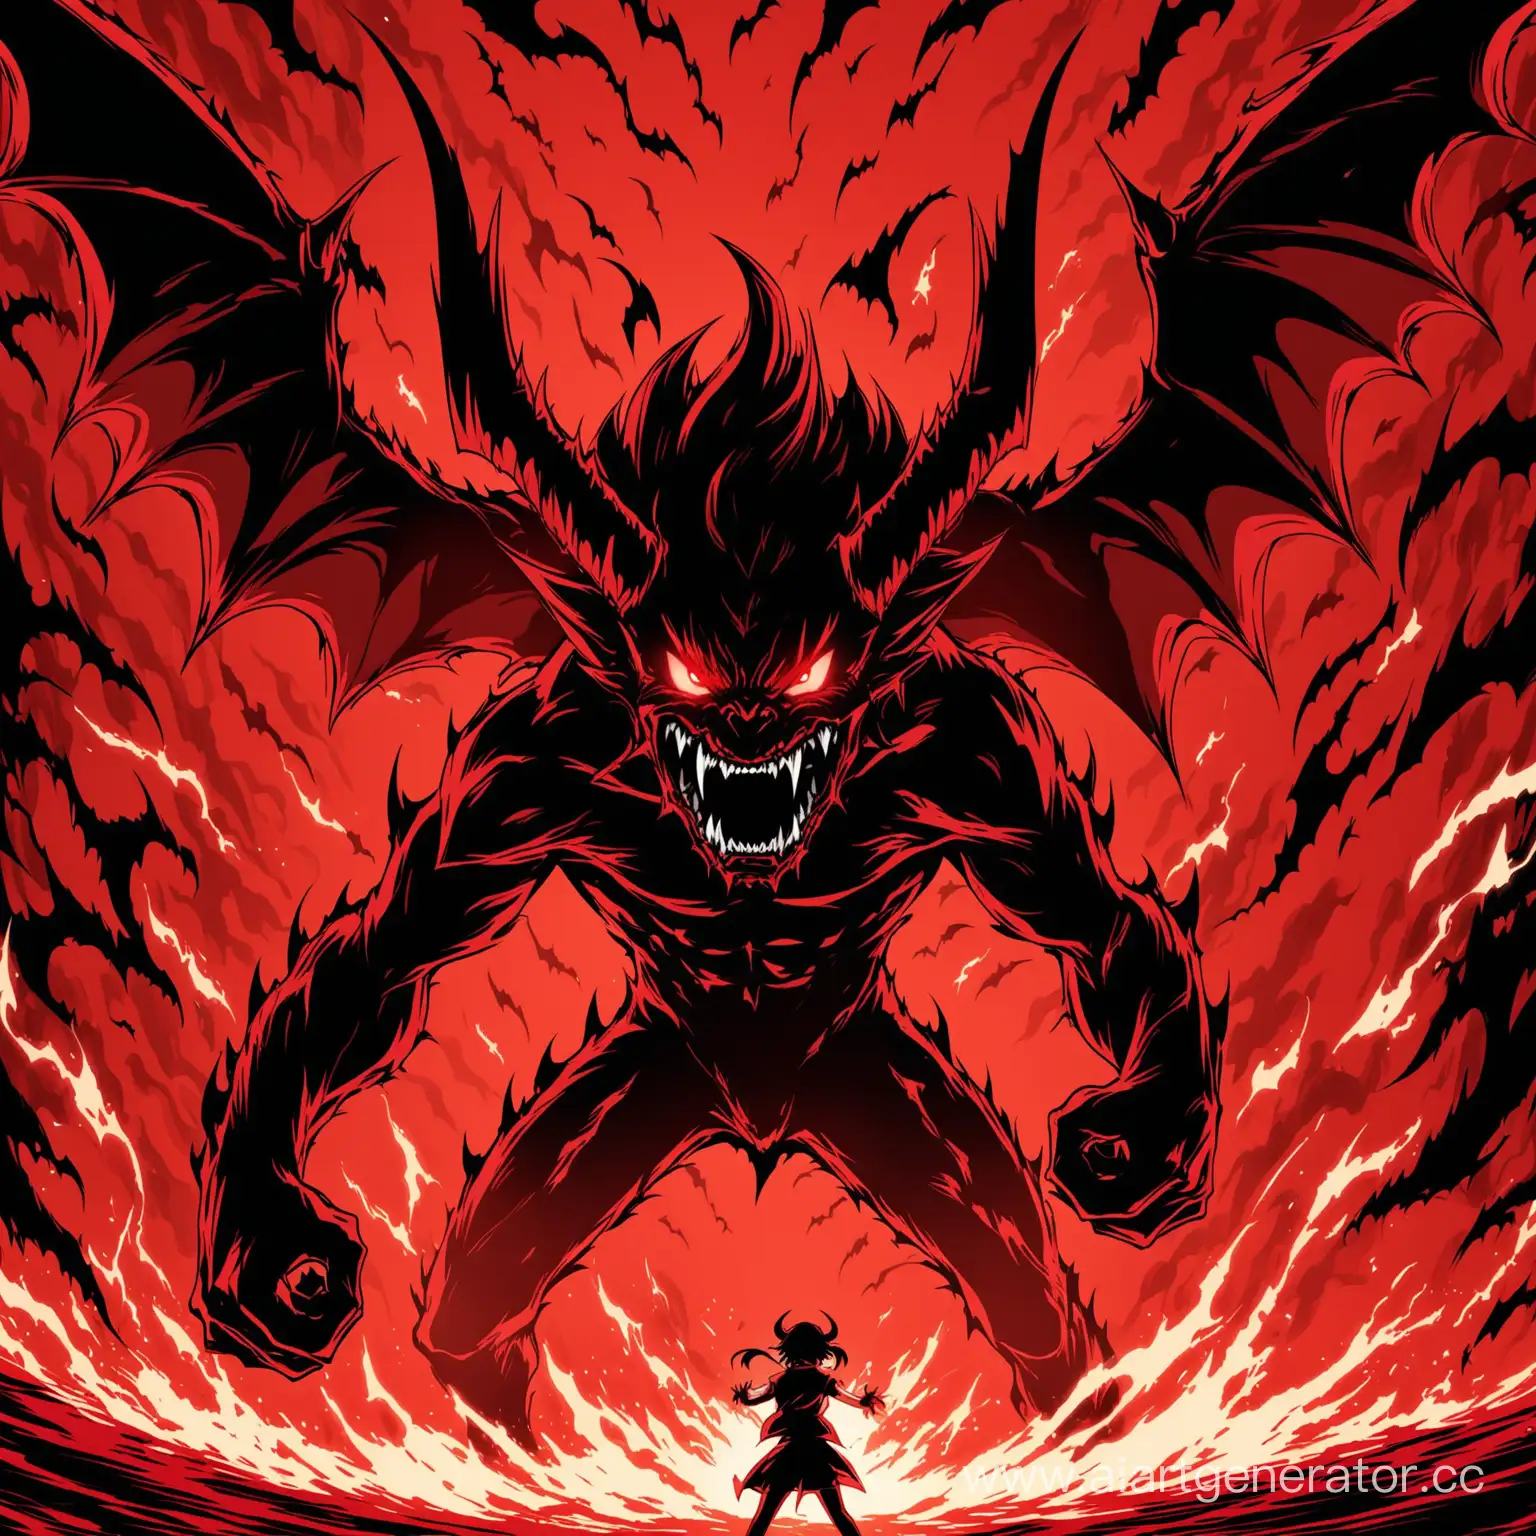 Sinister-Demon-Consuming-Souls-in-Fiery-Anime-Scene